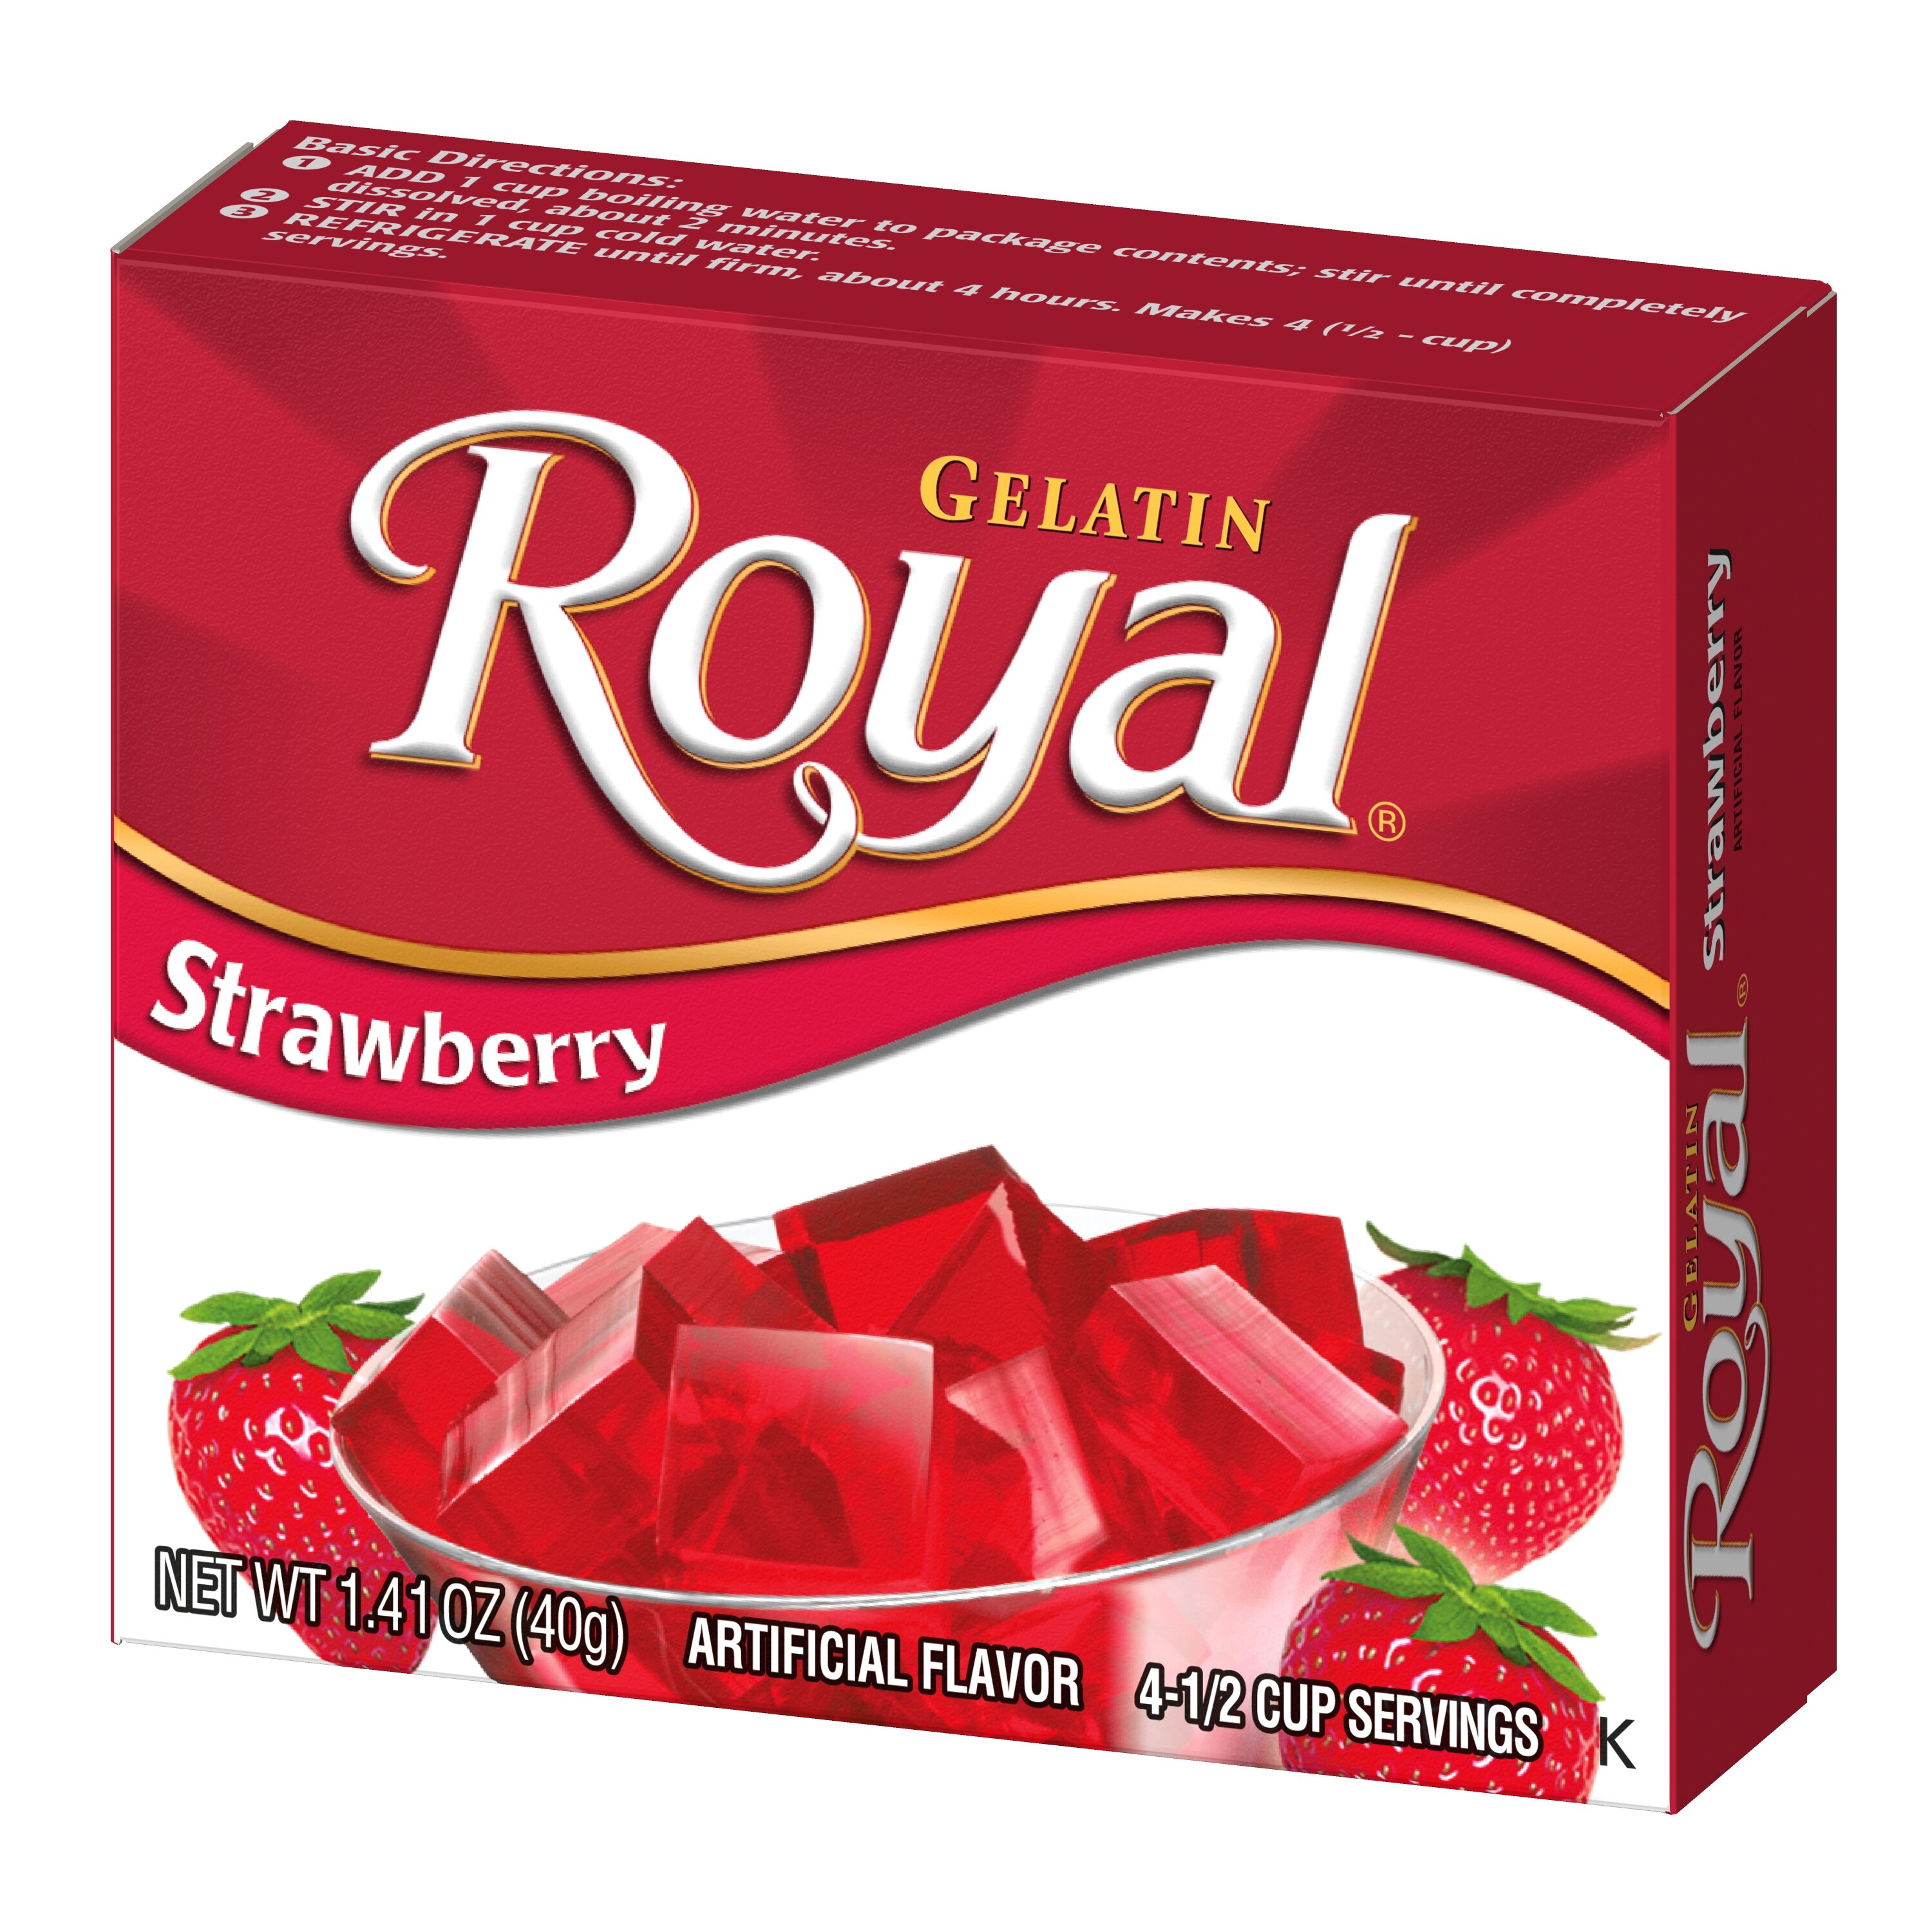 Royal Gelatin, Strawberry, 1.4 oz